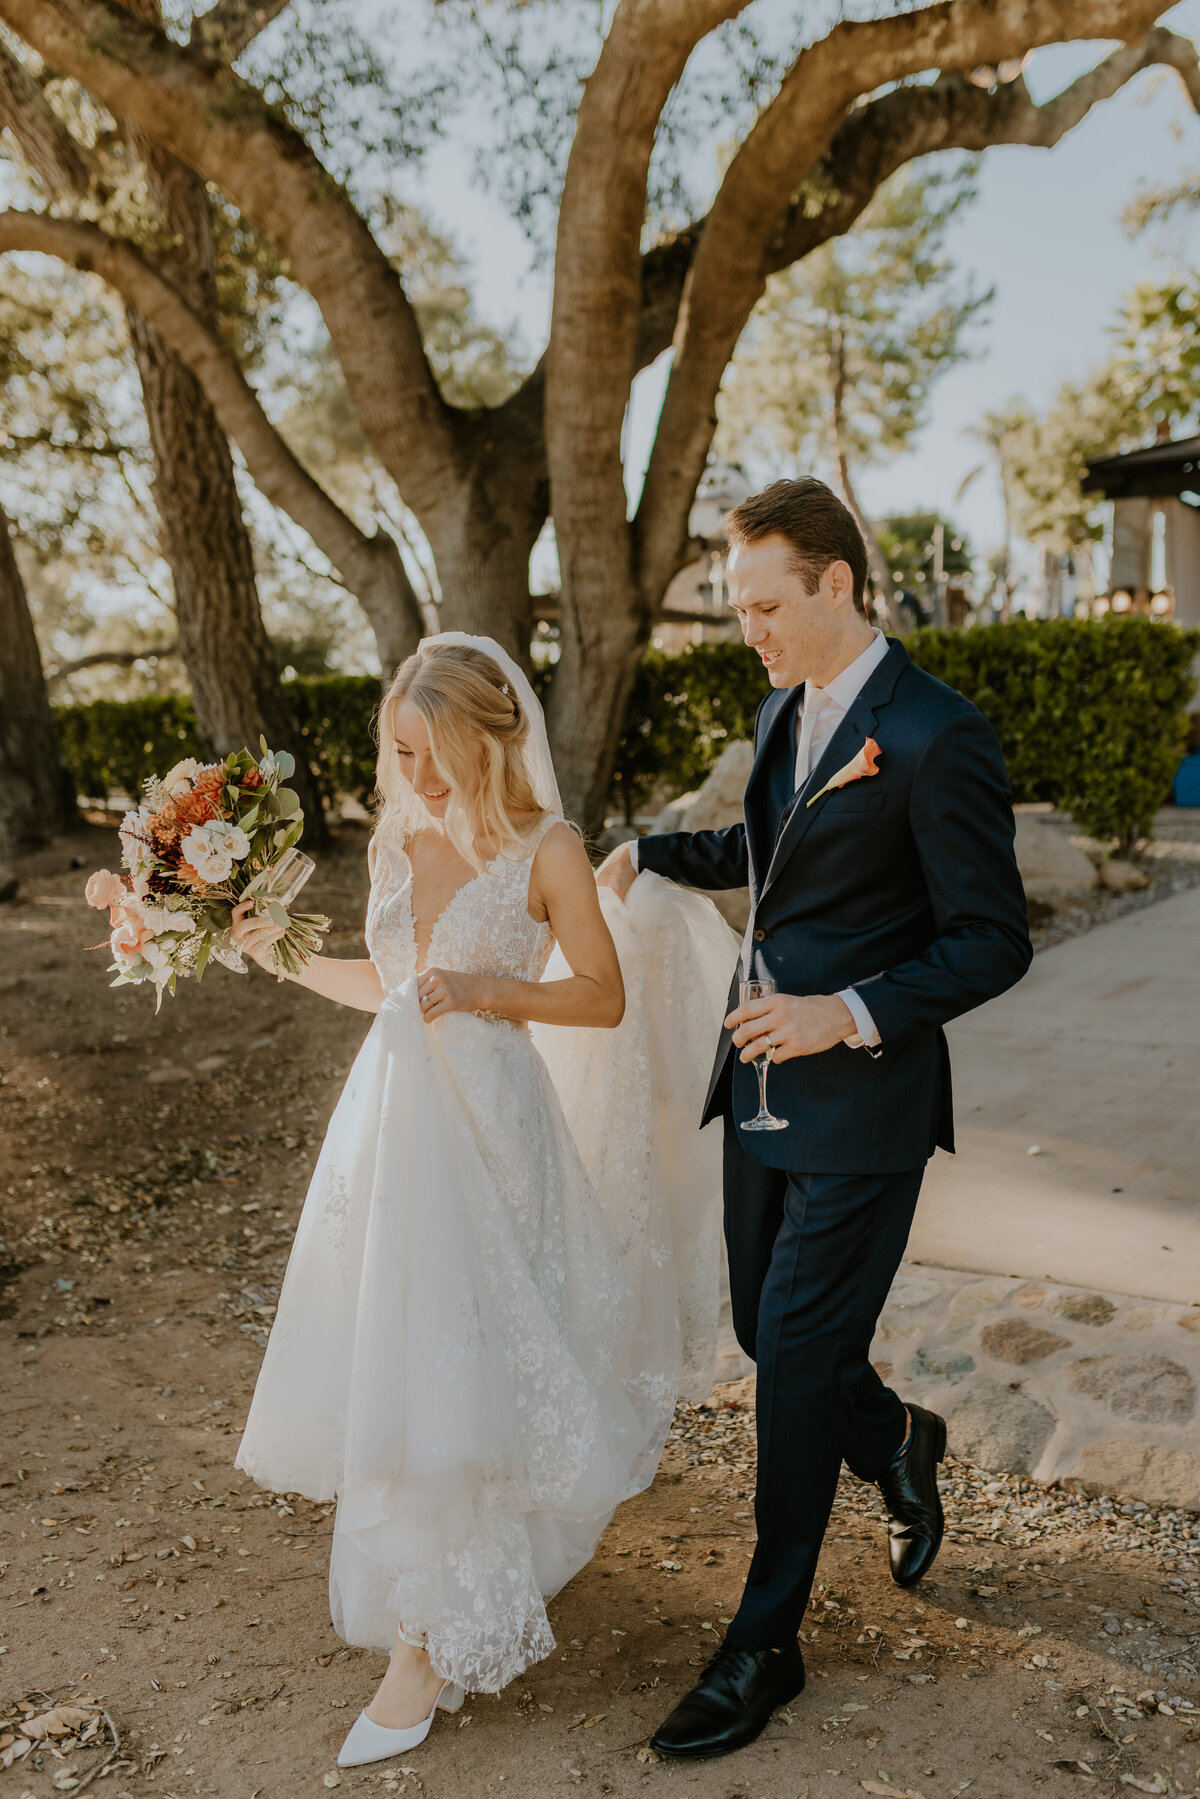 Beautiful wedding dress bride and groom Temecula, California Wedding photographer Yescphotography